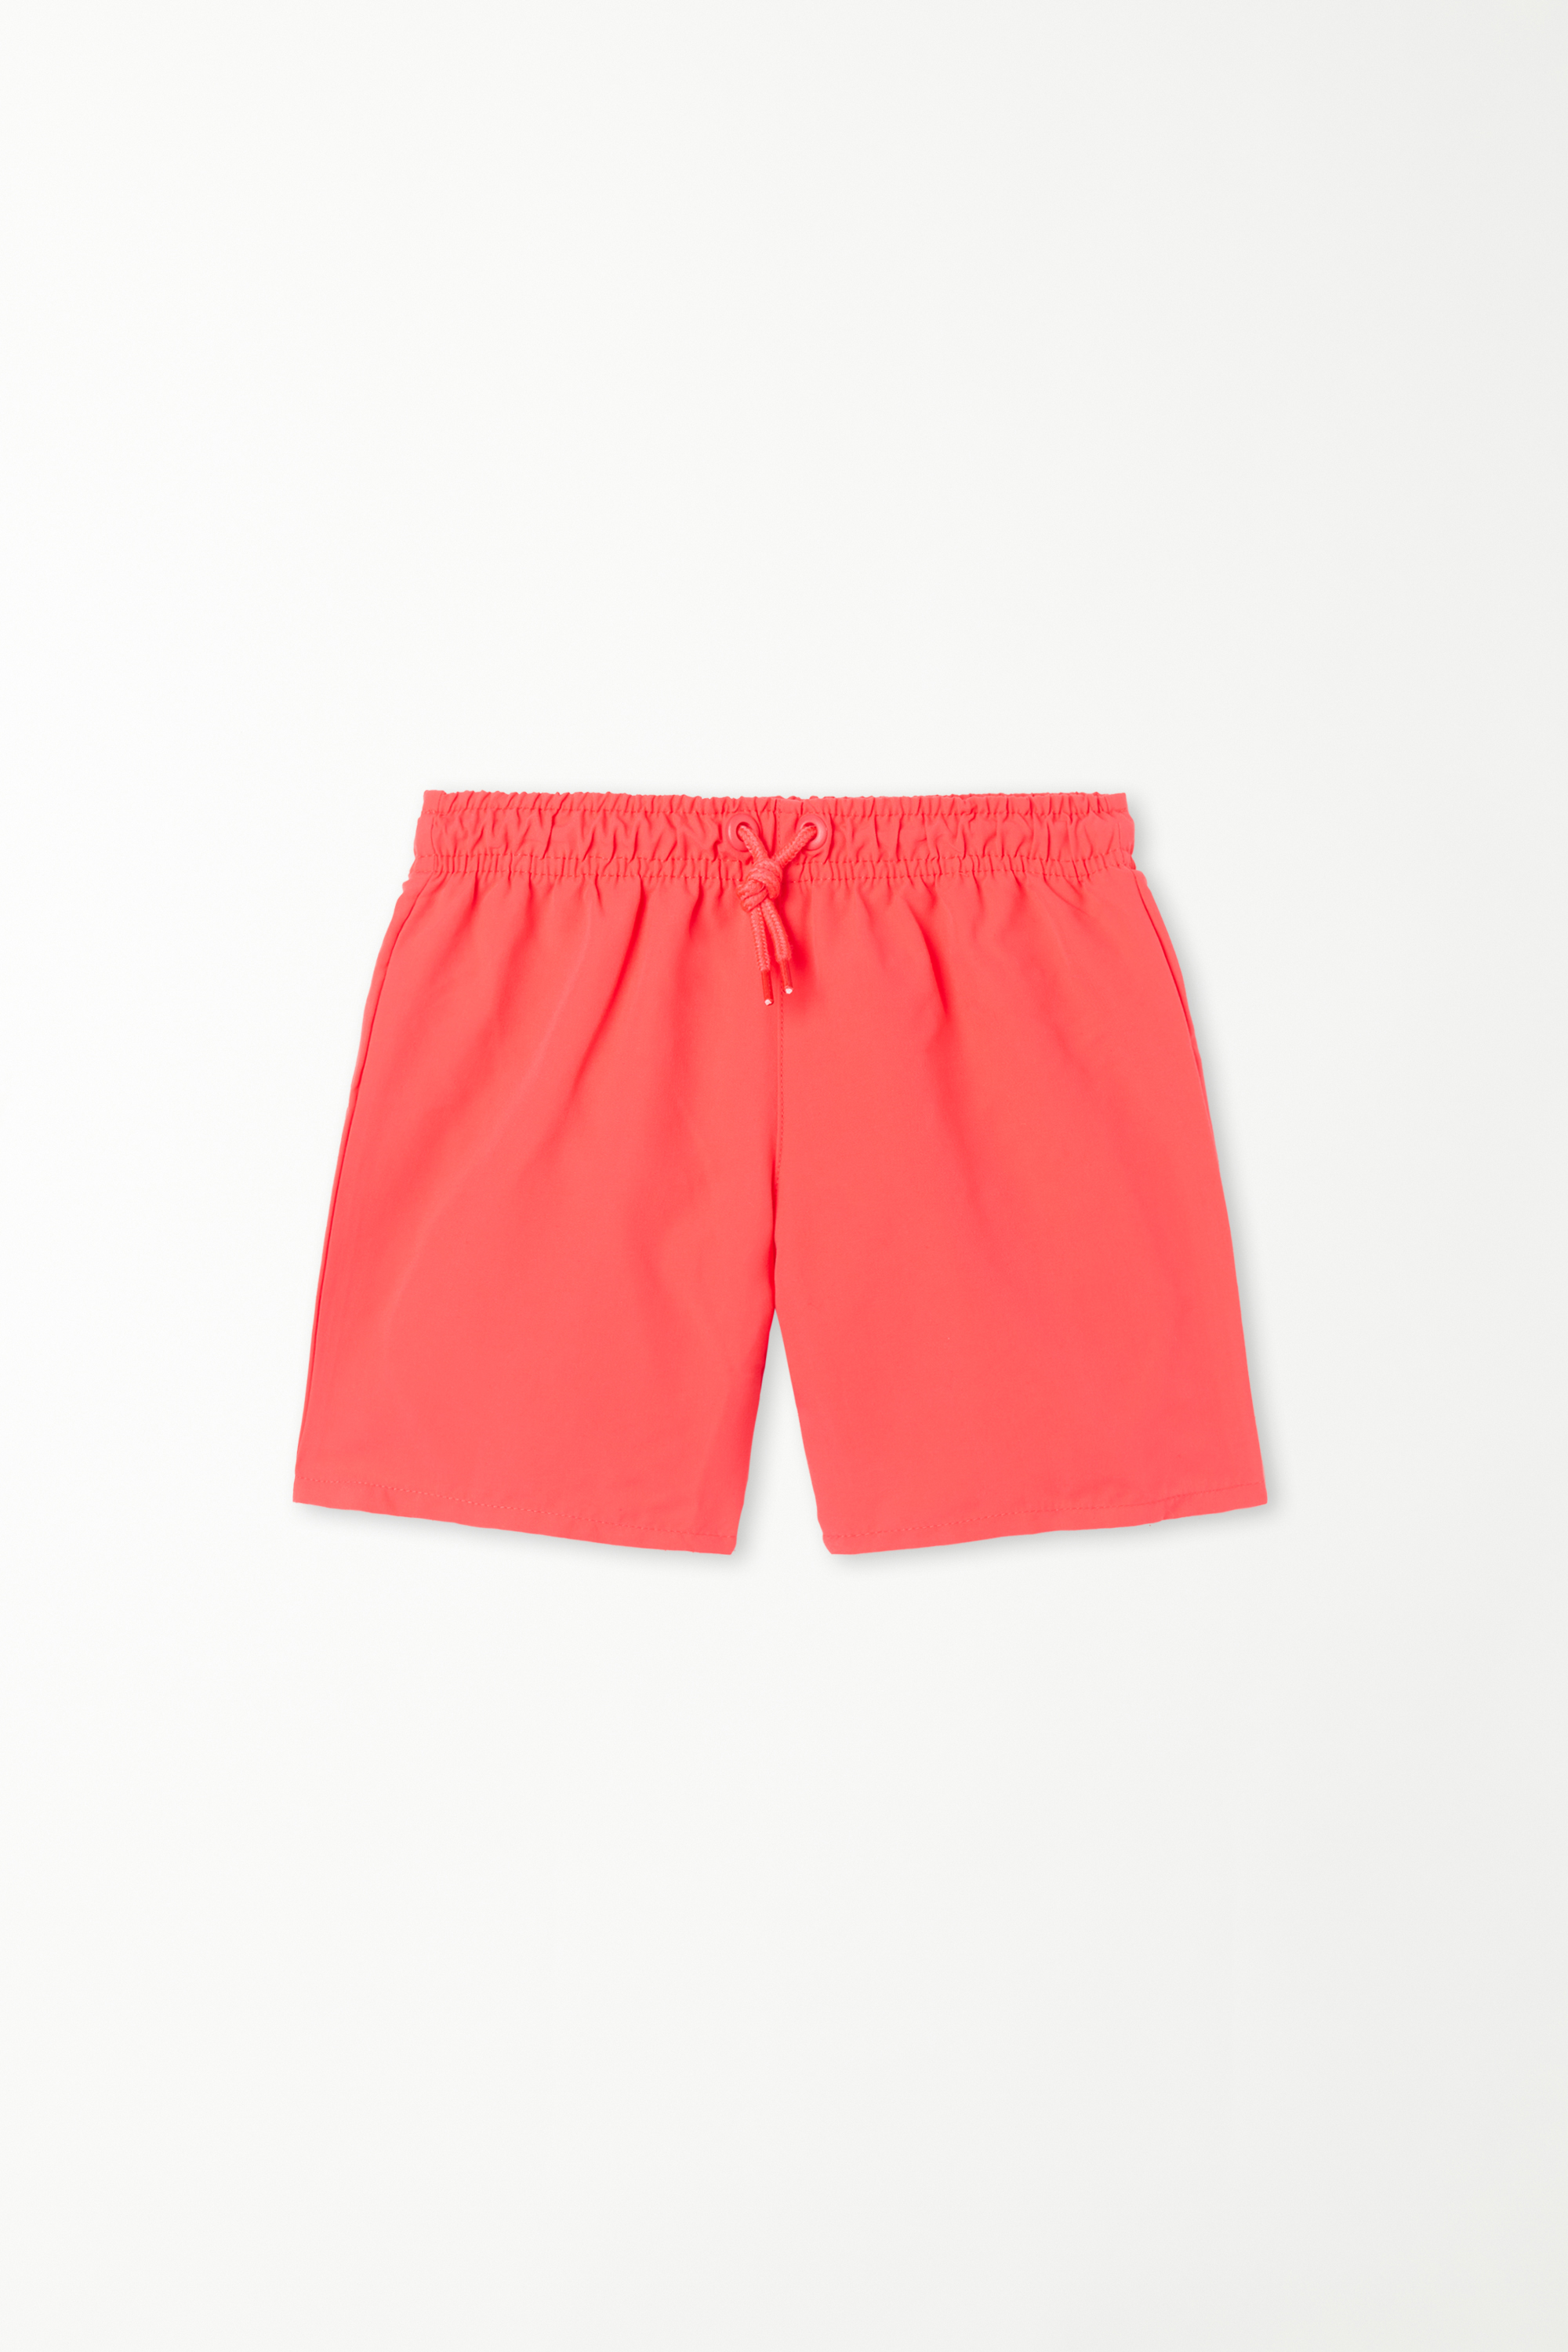 Boys’ Colour Change Swimming Shorts